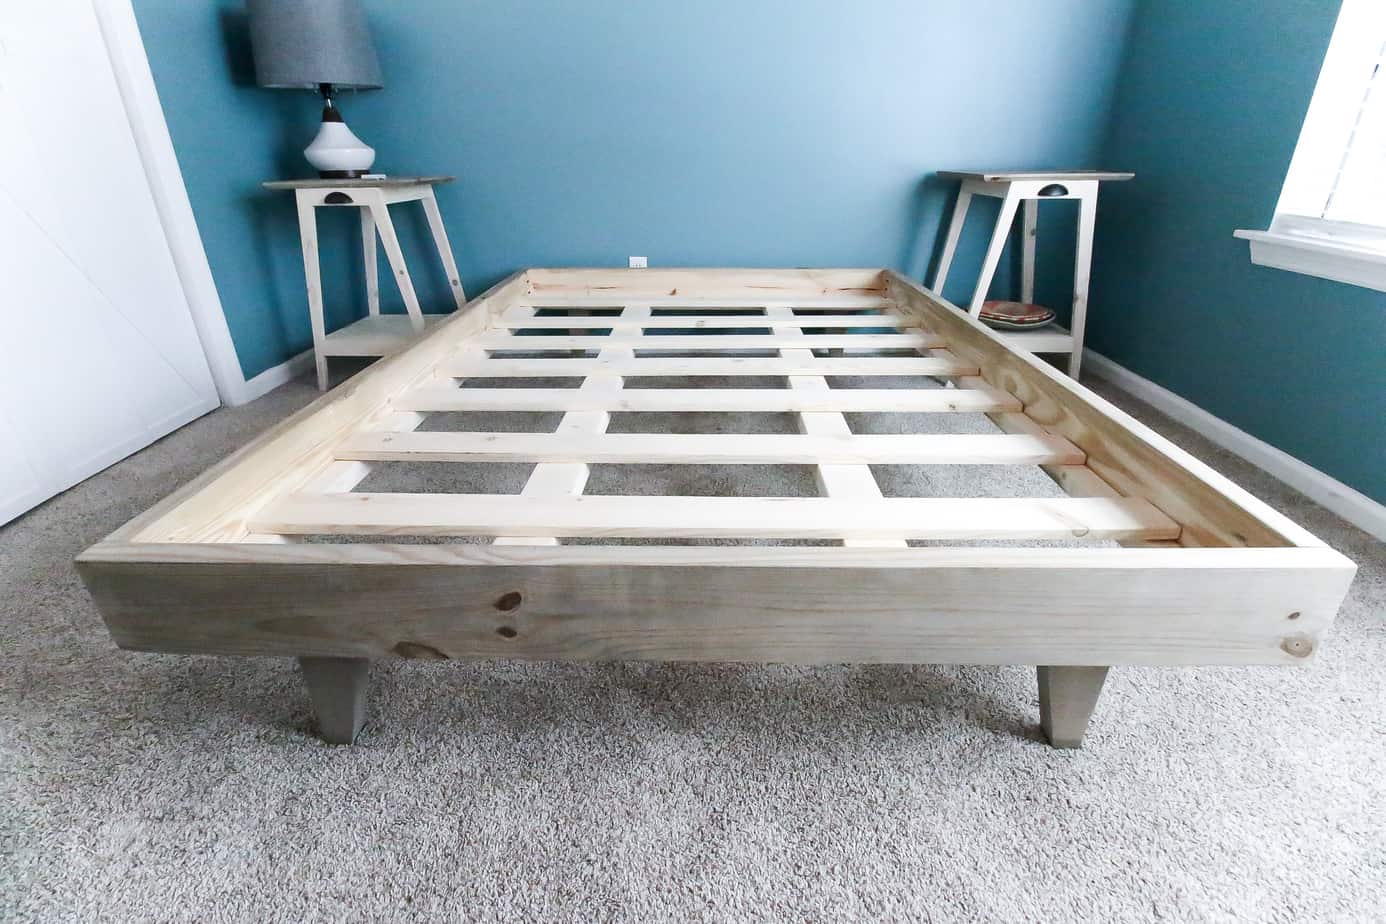 How To Build A Platform Bed For 50, Plans For Building A King Size Platform Bed